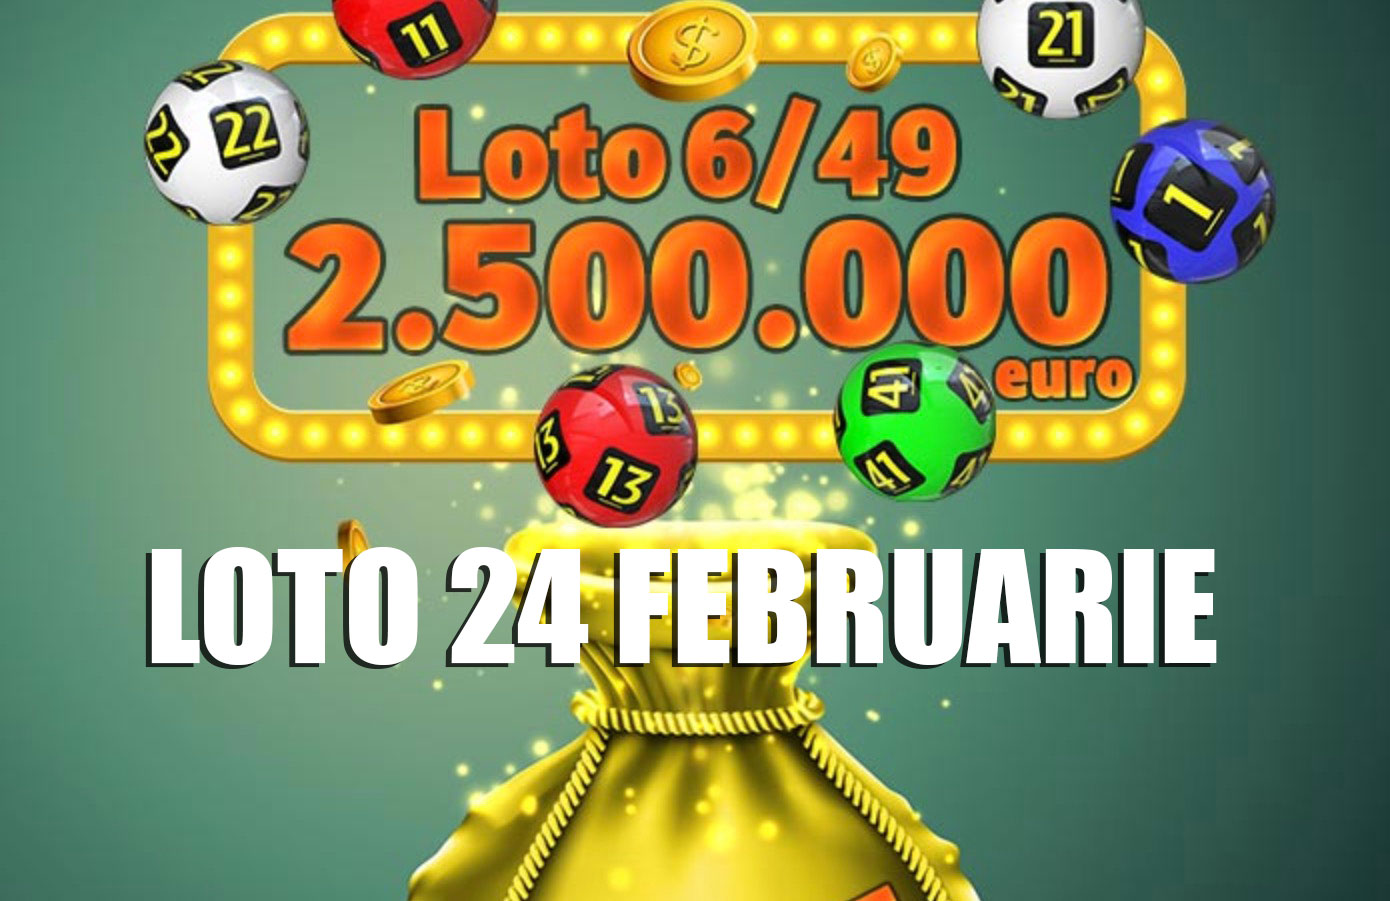 Rezultate loto 6/49 24 februarie 2019 - Numerele extrase la Loto 6 din 49, Joker, Noroc, Noroc plus, 5/40